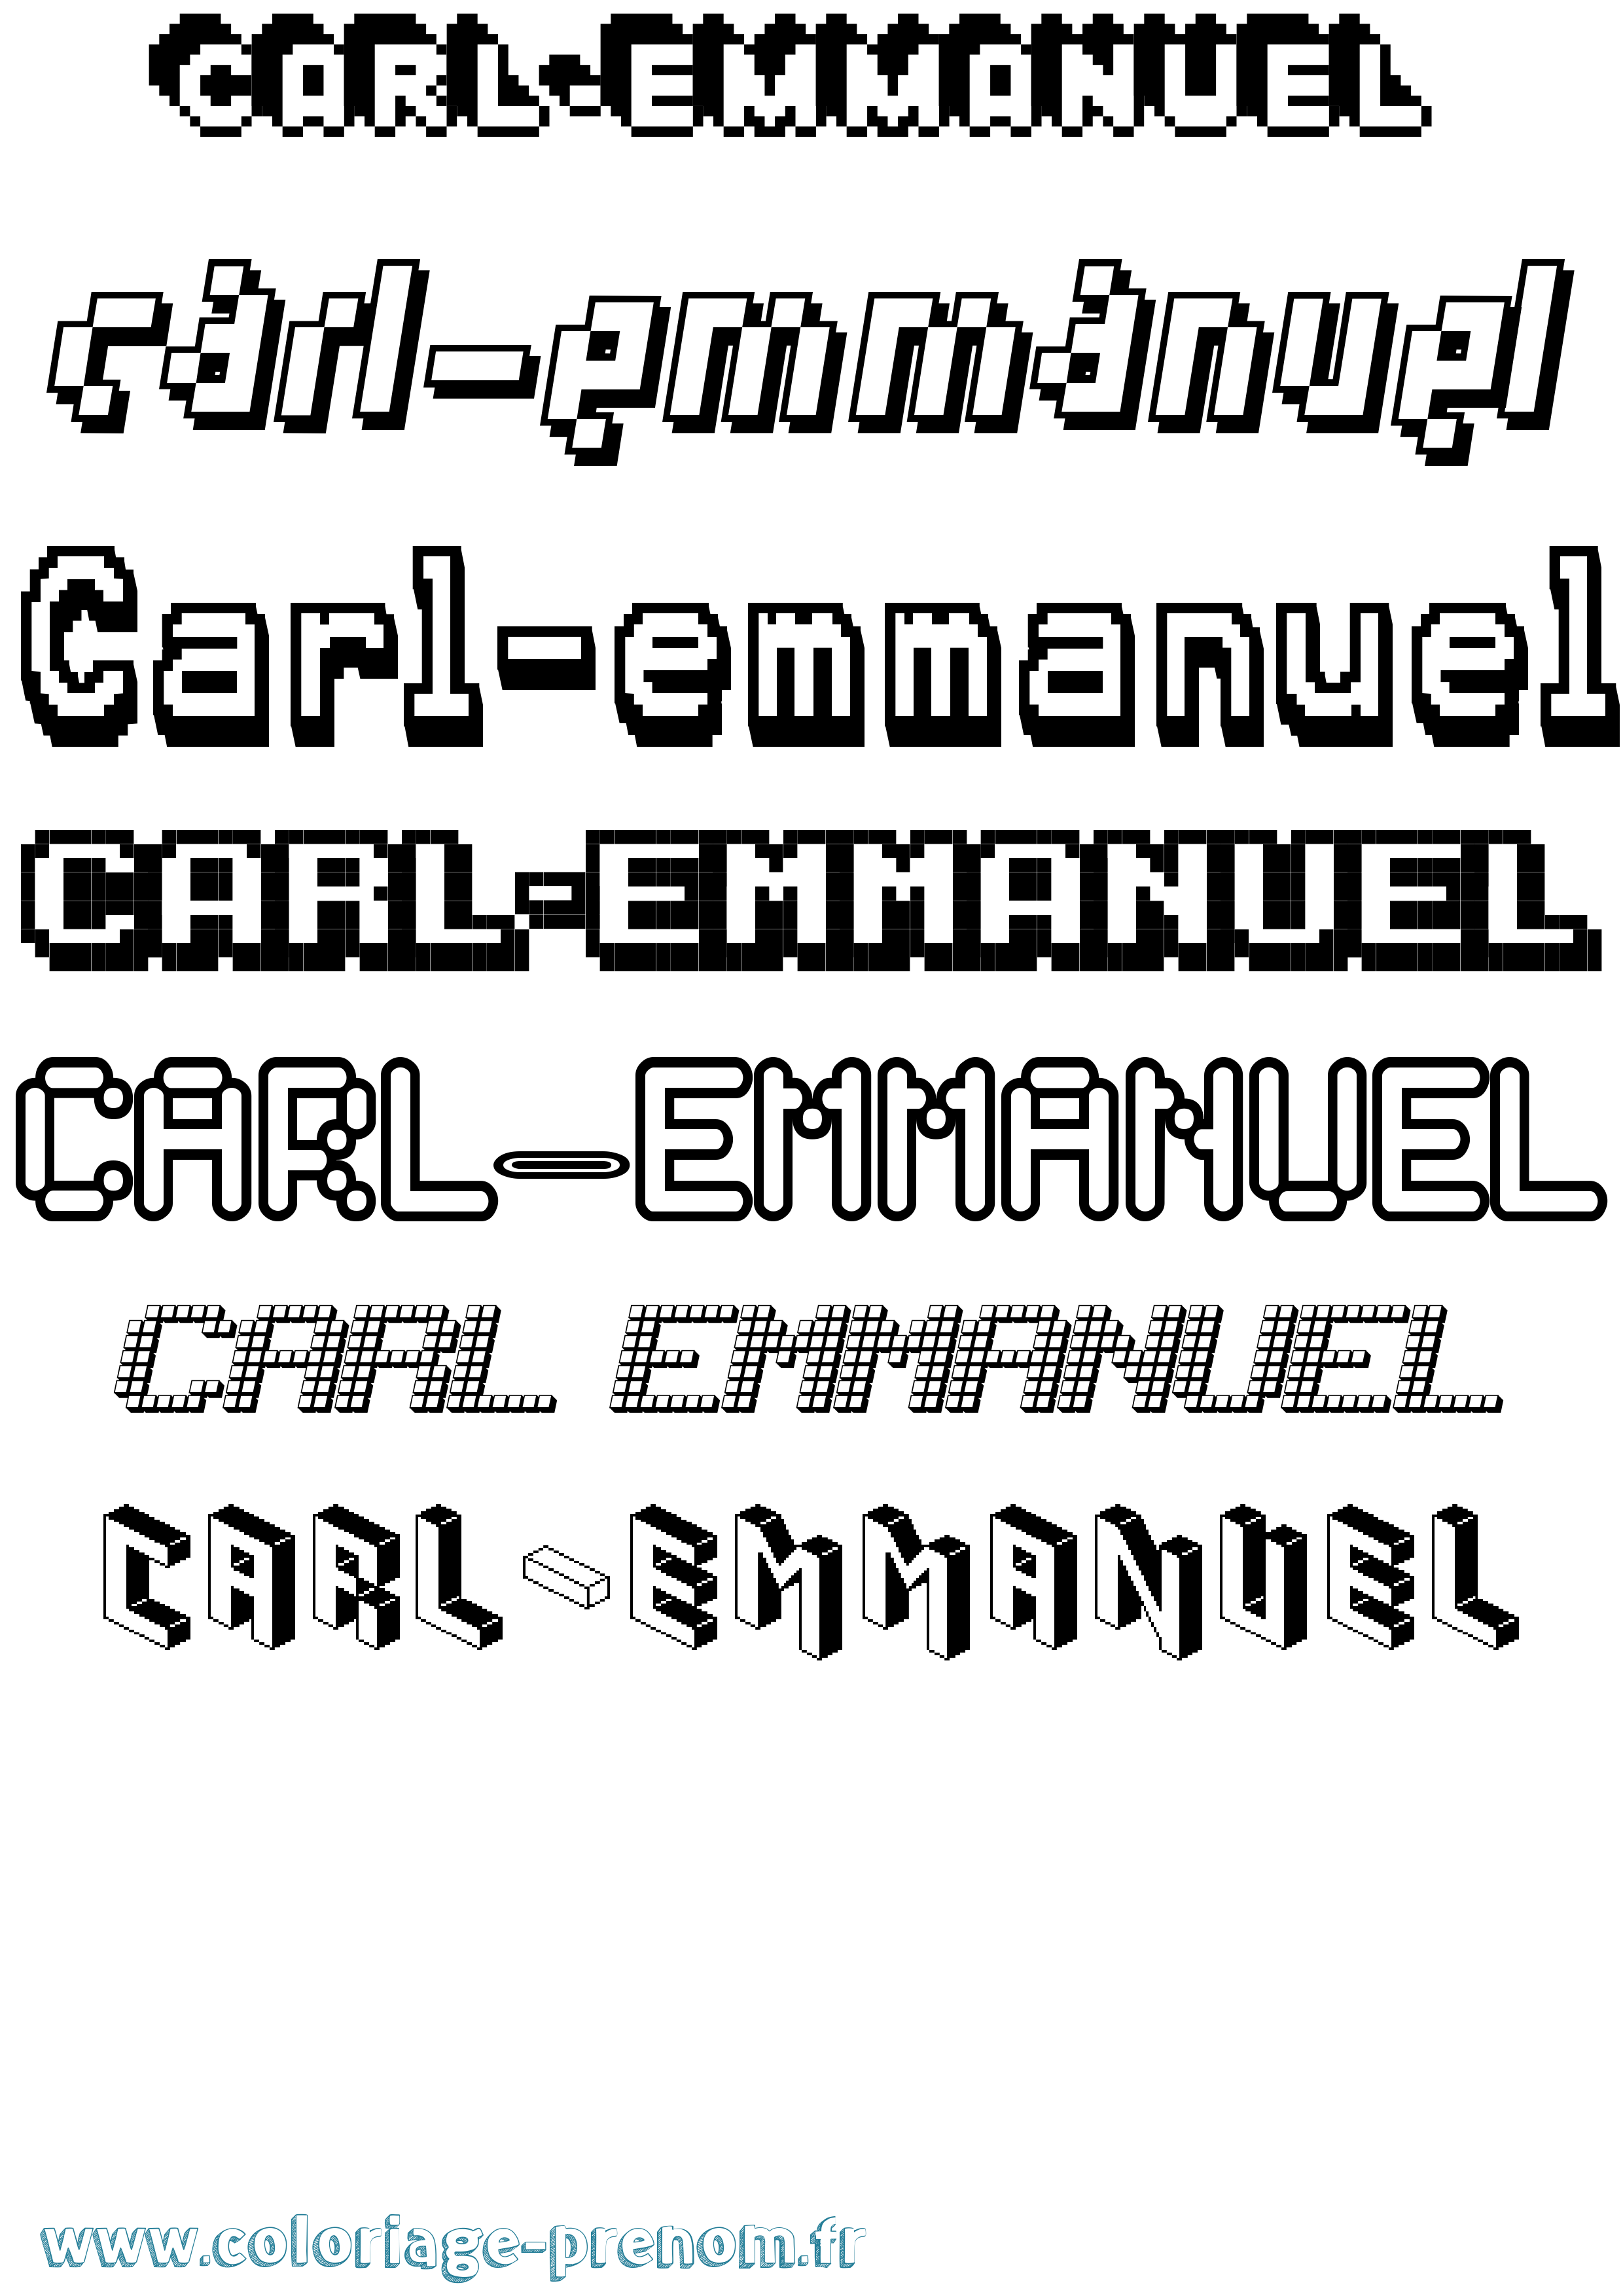 Coloriage prénom Carl-Emmanuel Pixel